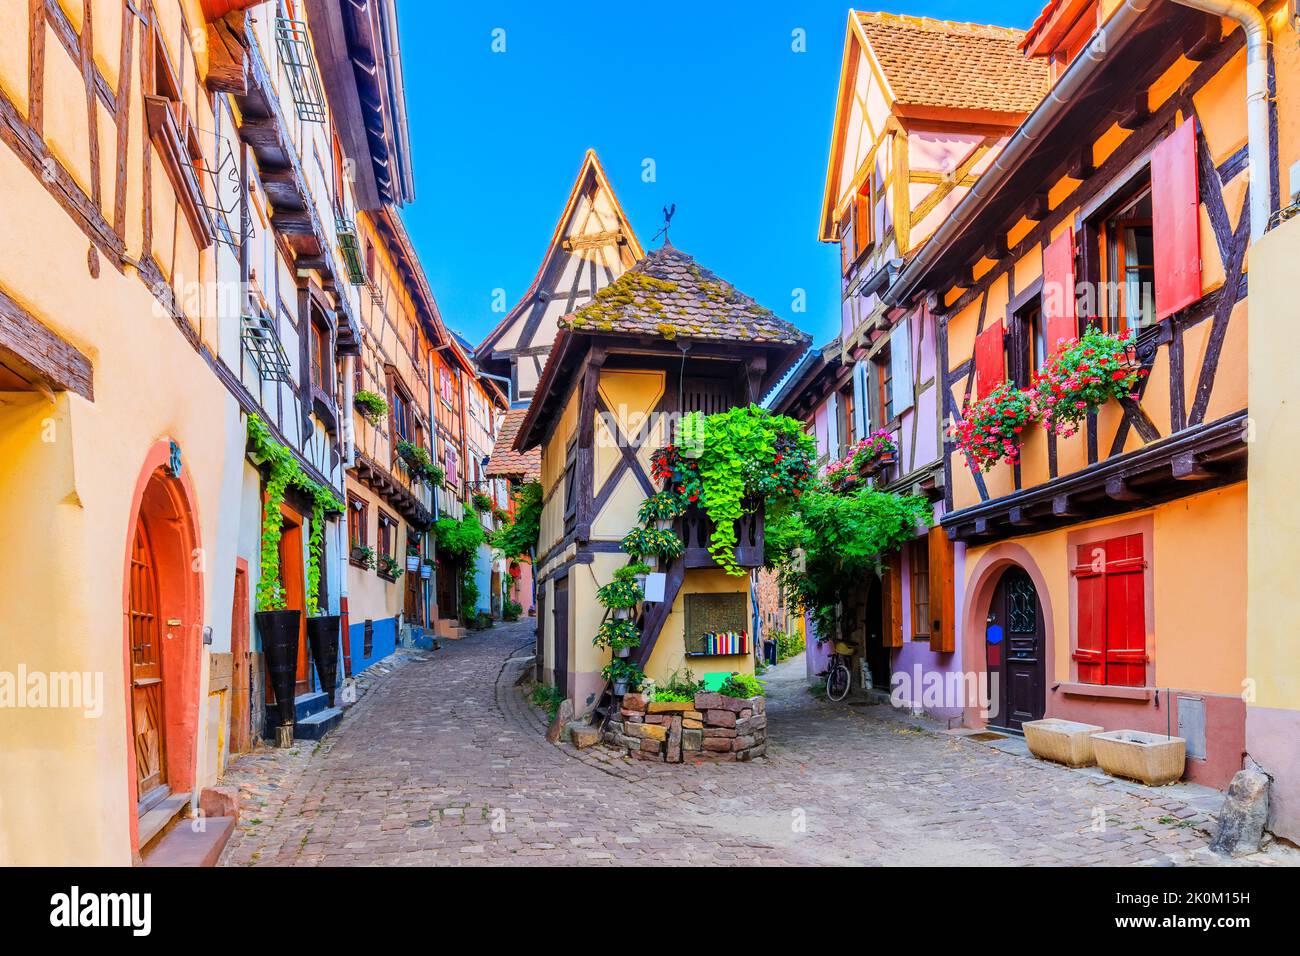 Eguisheim, Francia. Coloridas casas de entramado de madera en Alsacia. Foto de stock